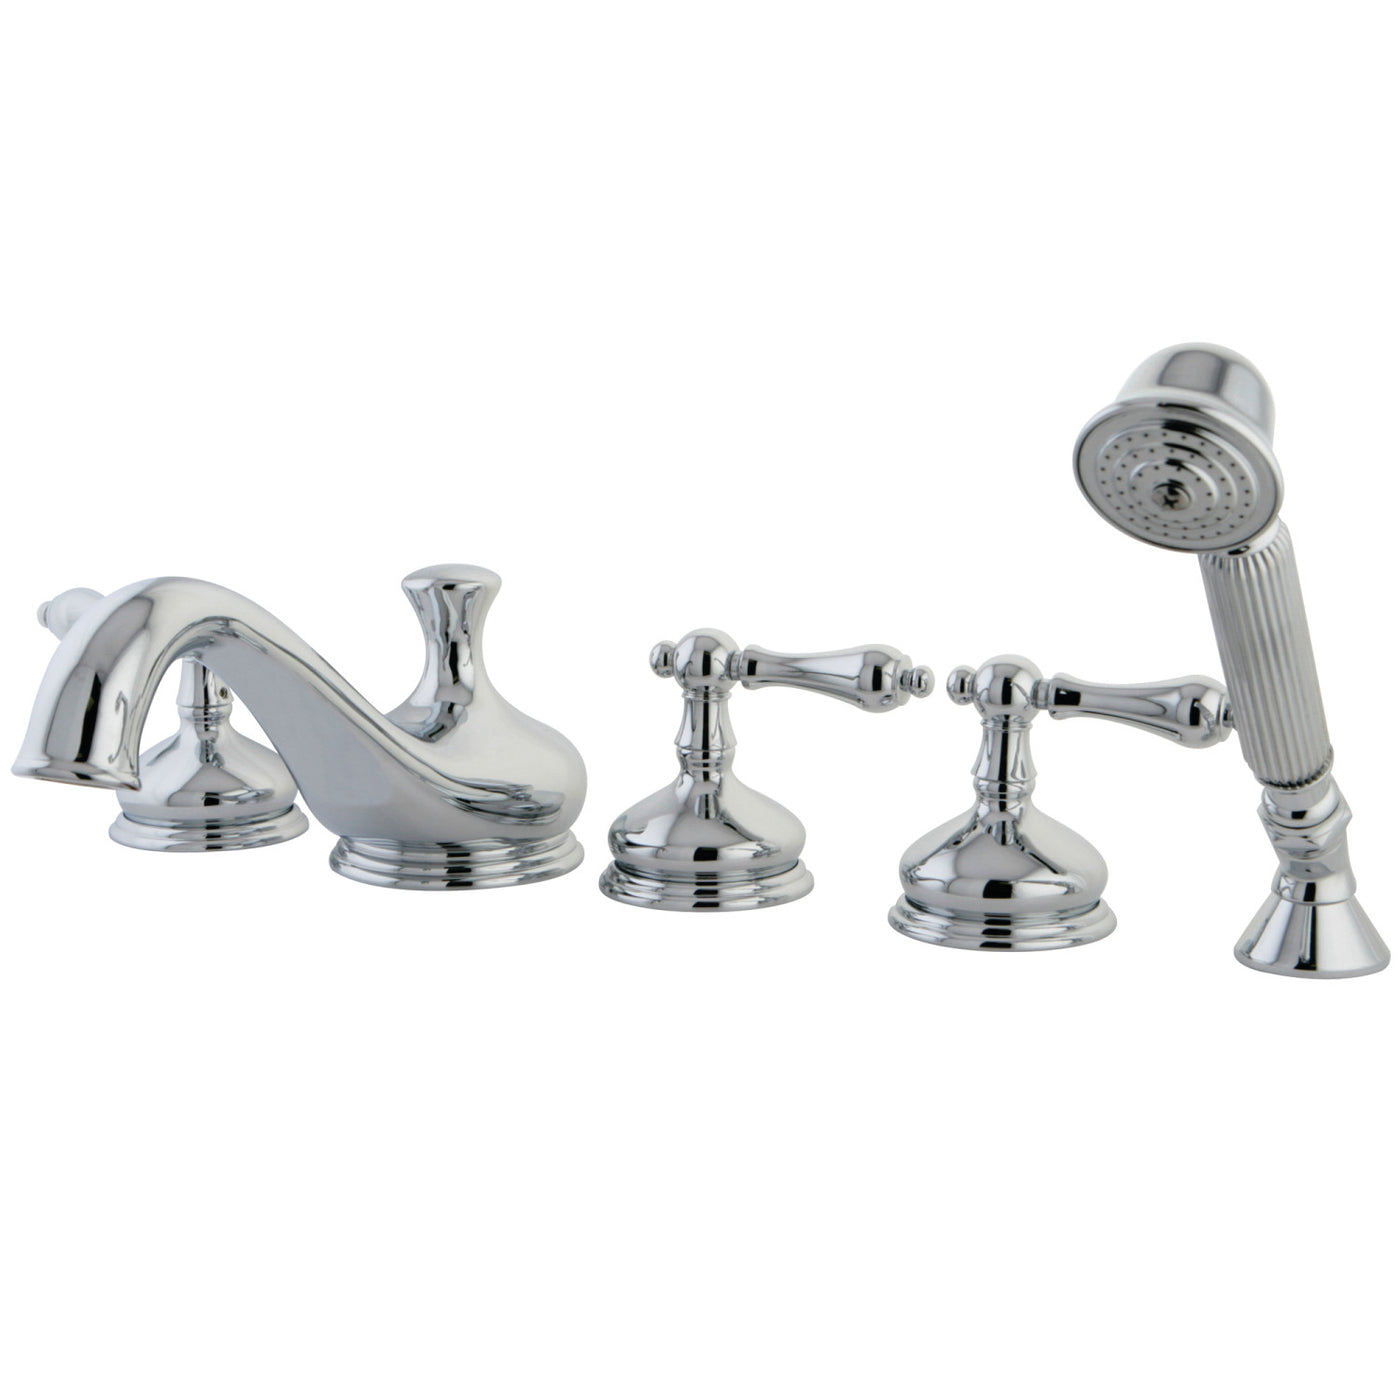 Elements of Design ES33315AL Roman Tub Faucet with Hand Shower, Polished Chrome